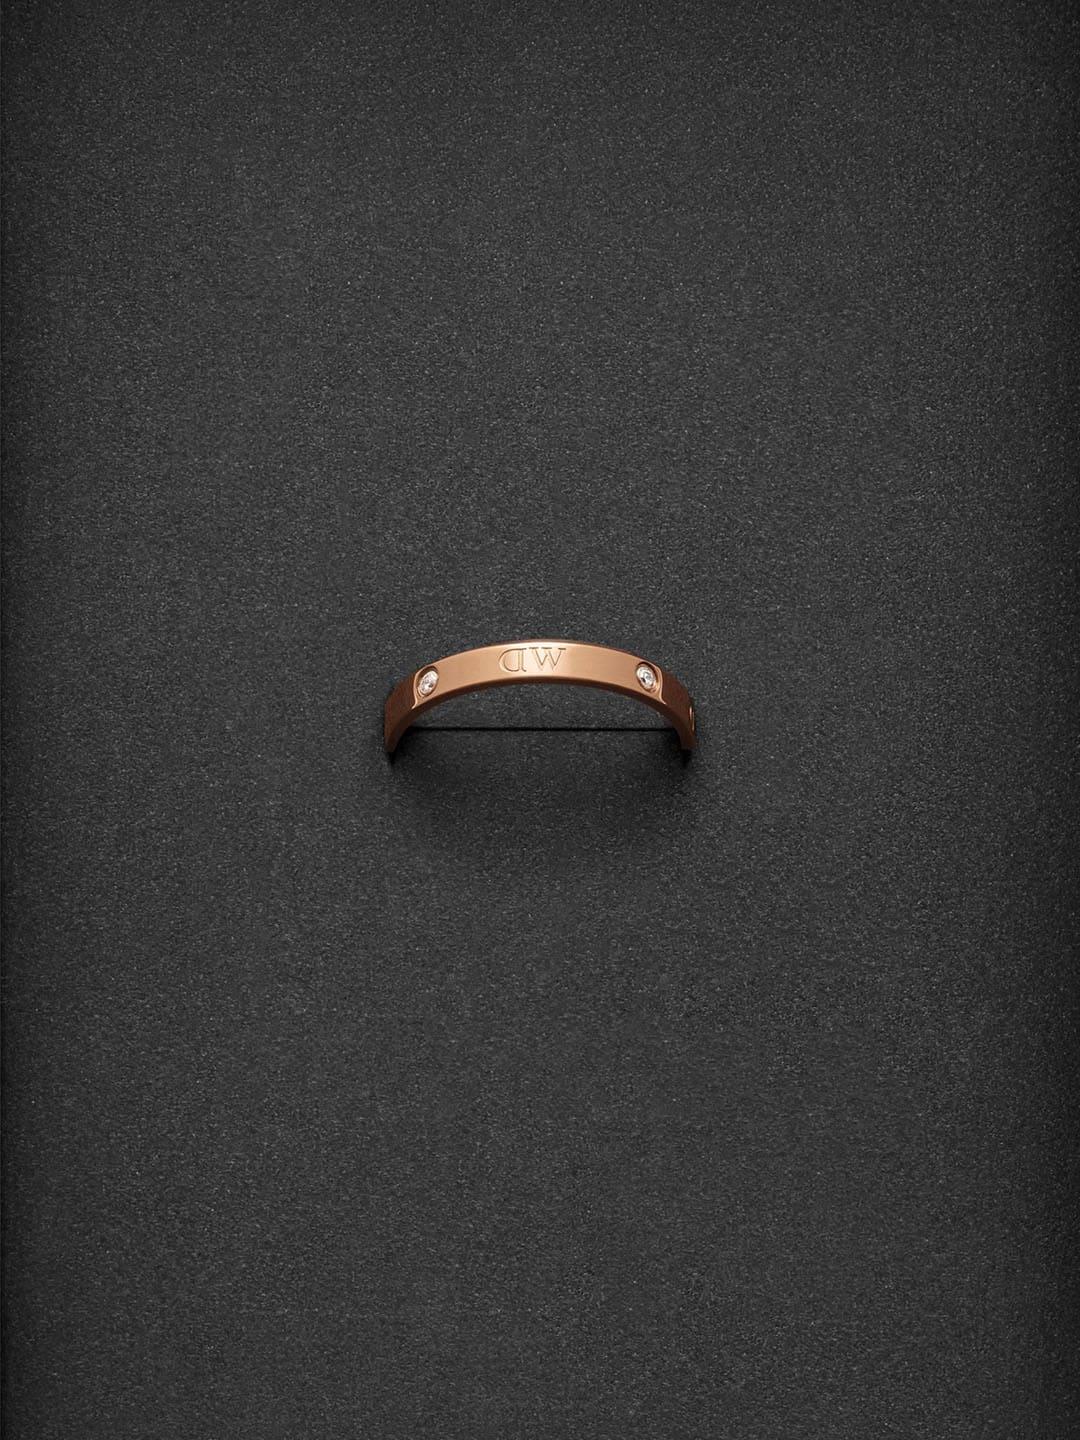 daniel wellington rose gold-plated stone-studded finger ring